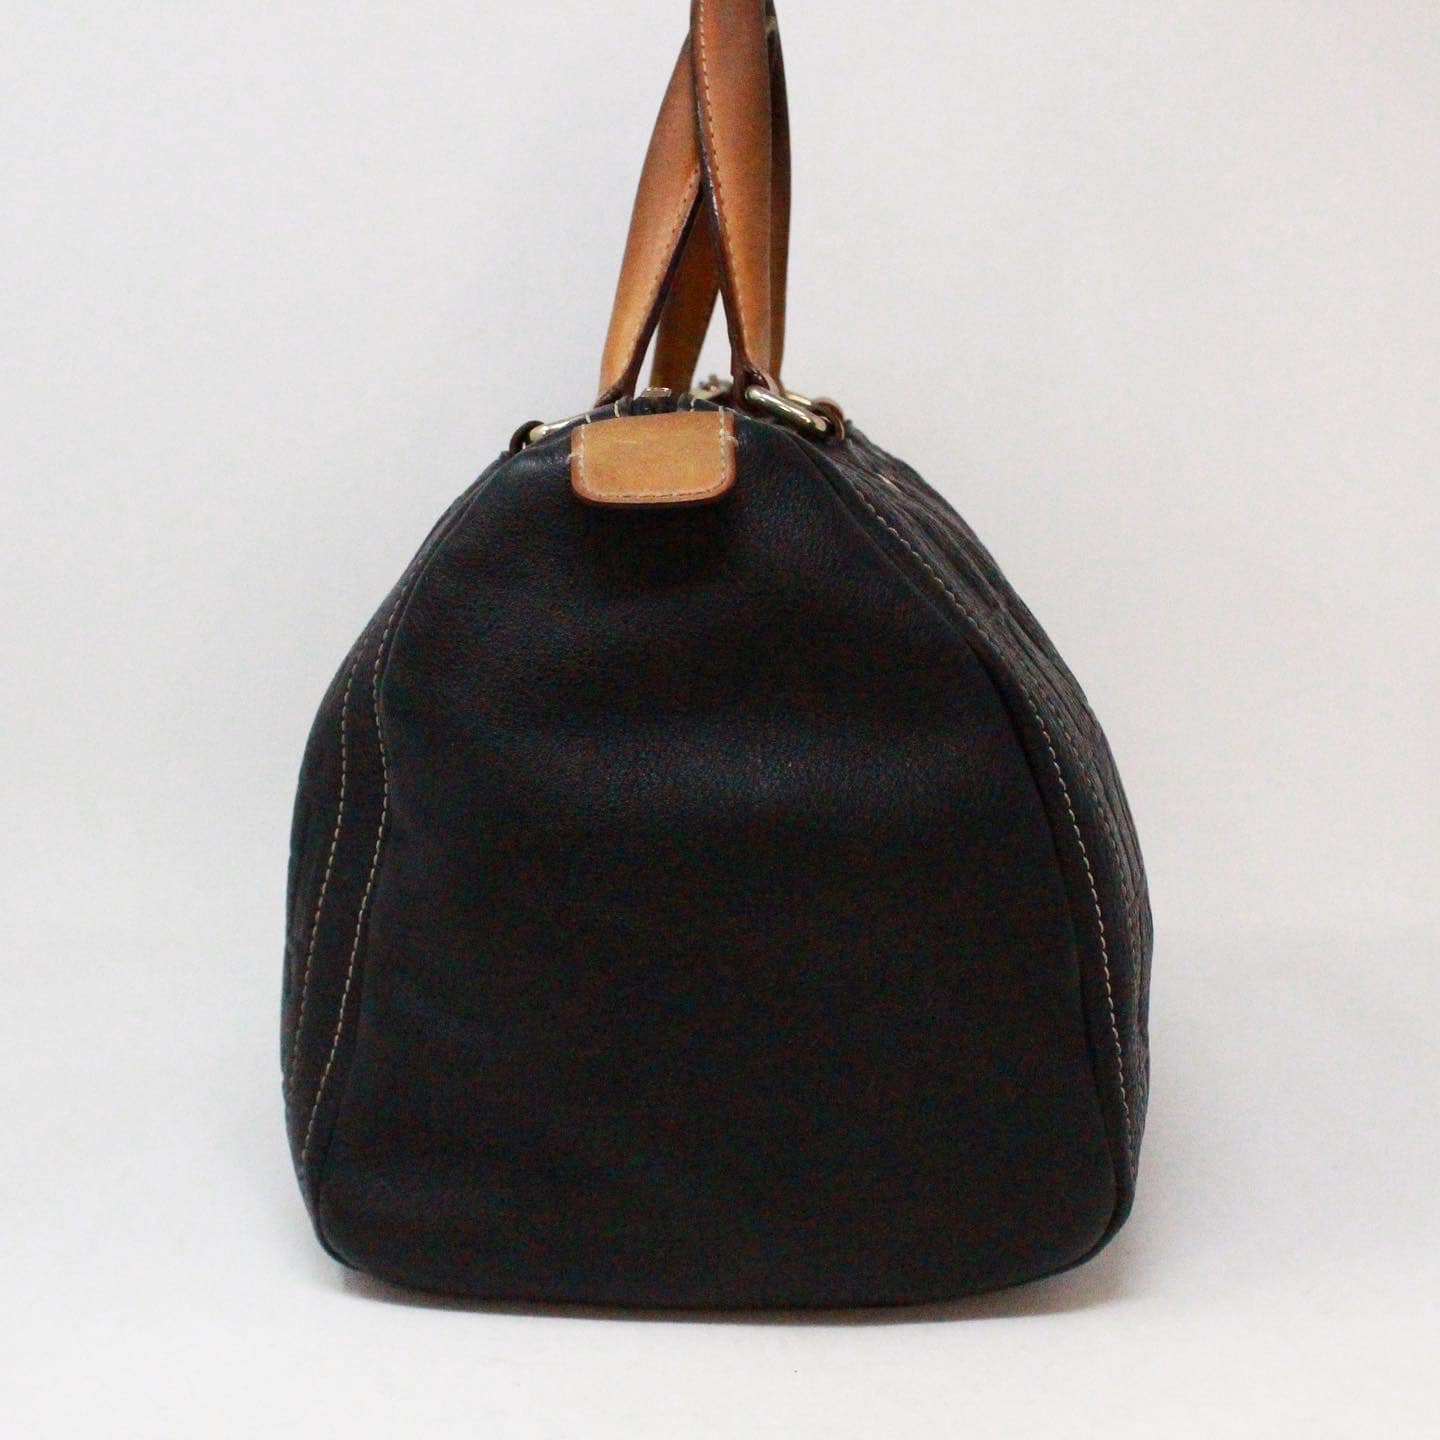 Carolina Herrera, Bags, Carolina Herrera Black Leather Handbag